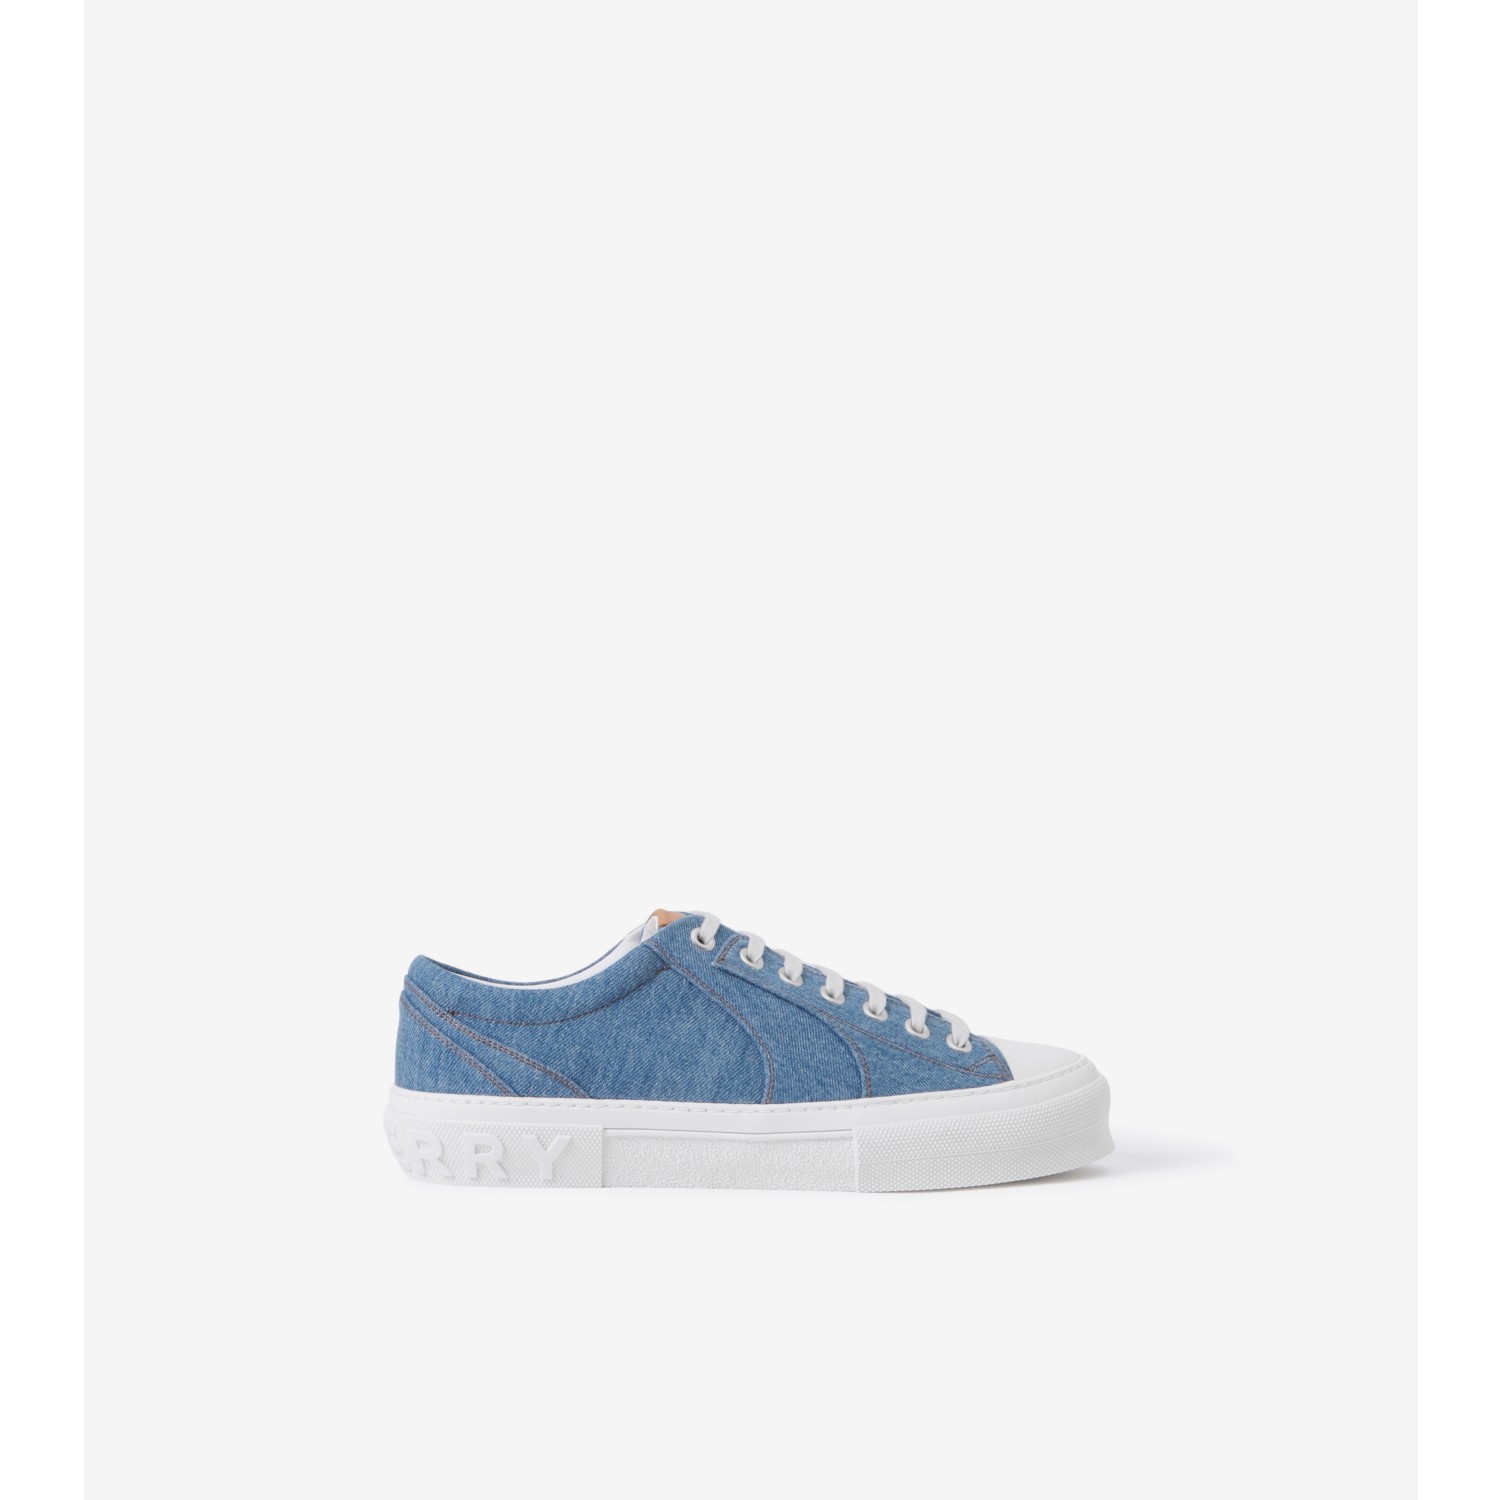 Burberry Women's 'Kai' Denim Shoes - Blue - Low-top Sneakers - 13